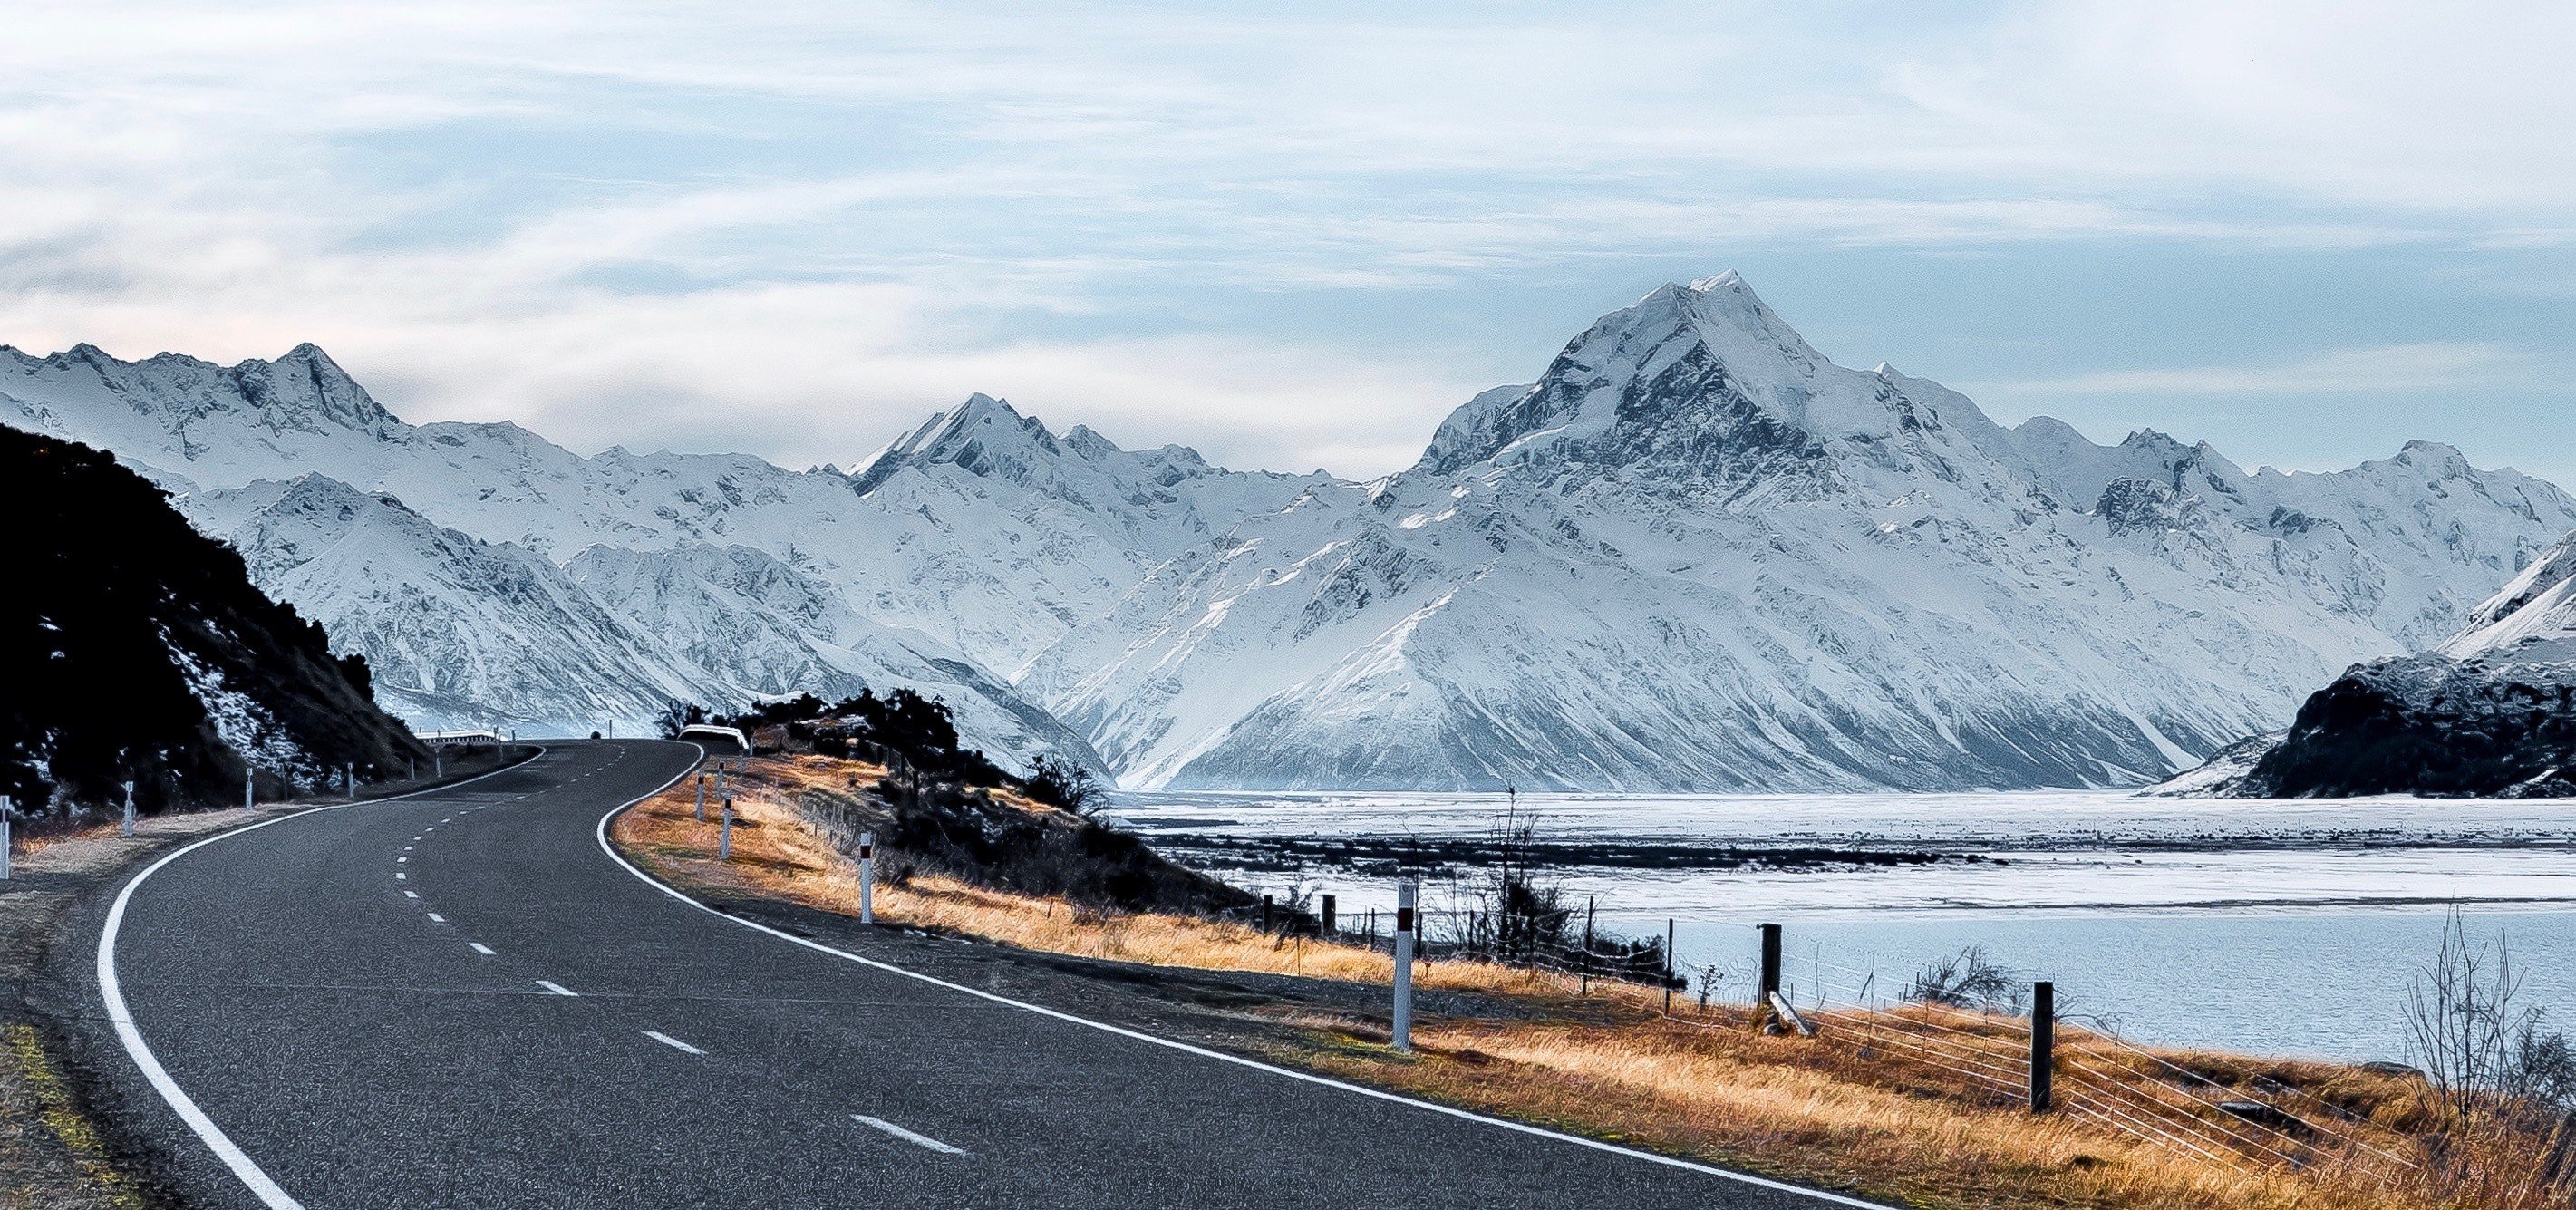 Wallpaper / road mountain snowy mountain and landscape HD 4k wallpaper free download